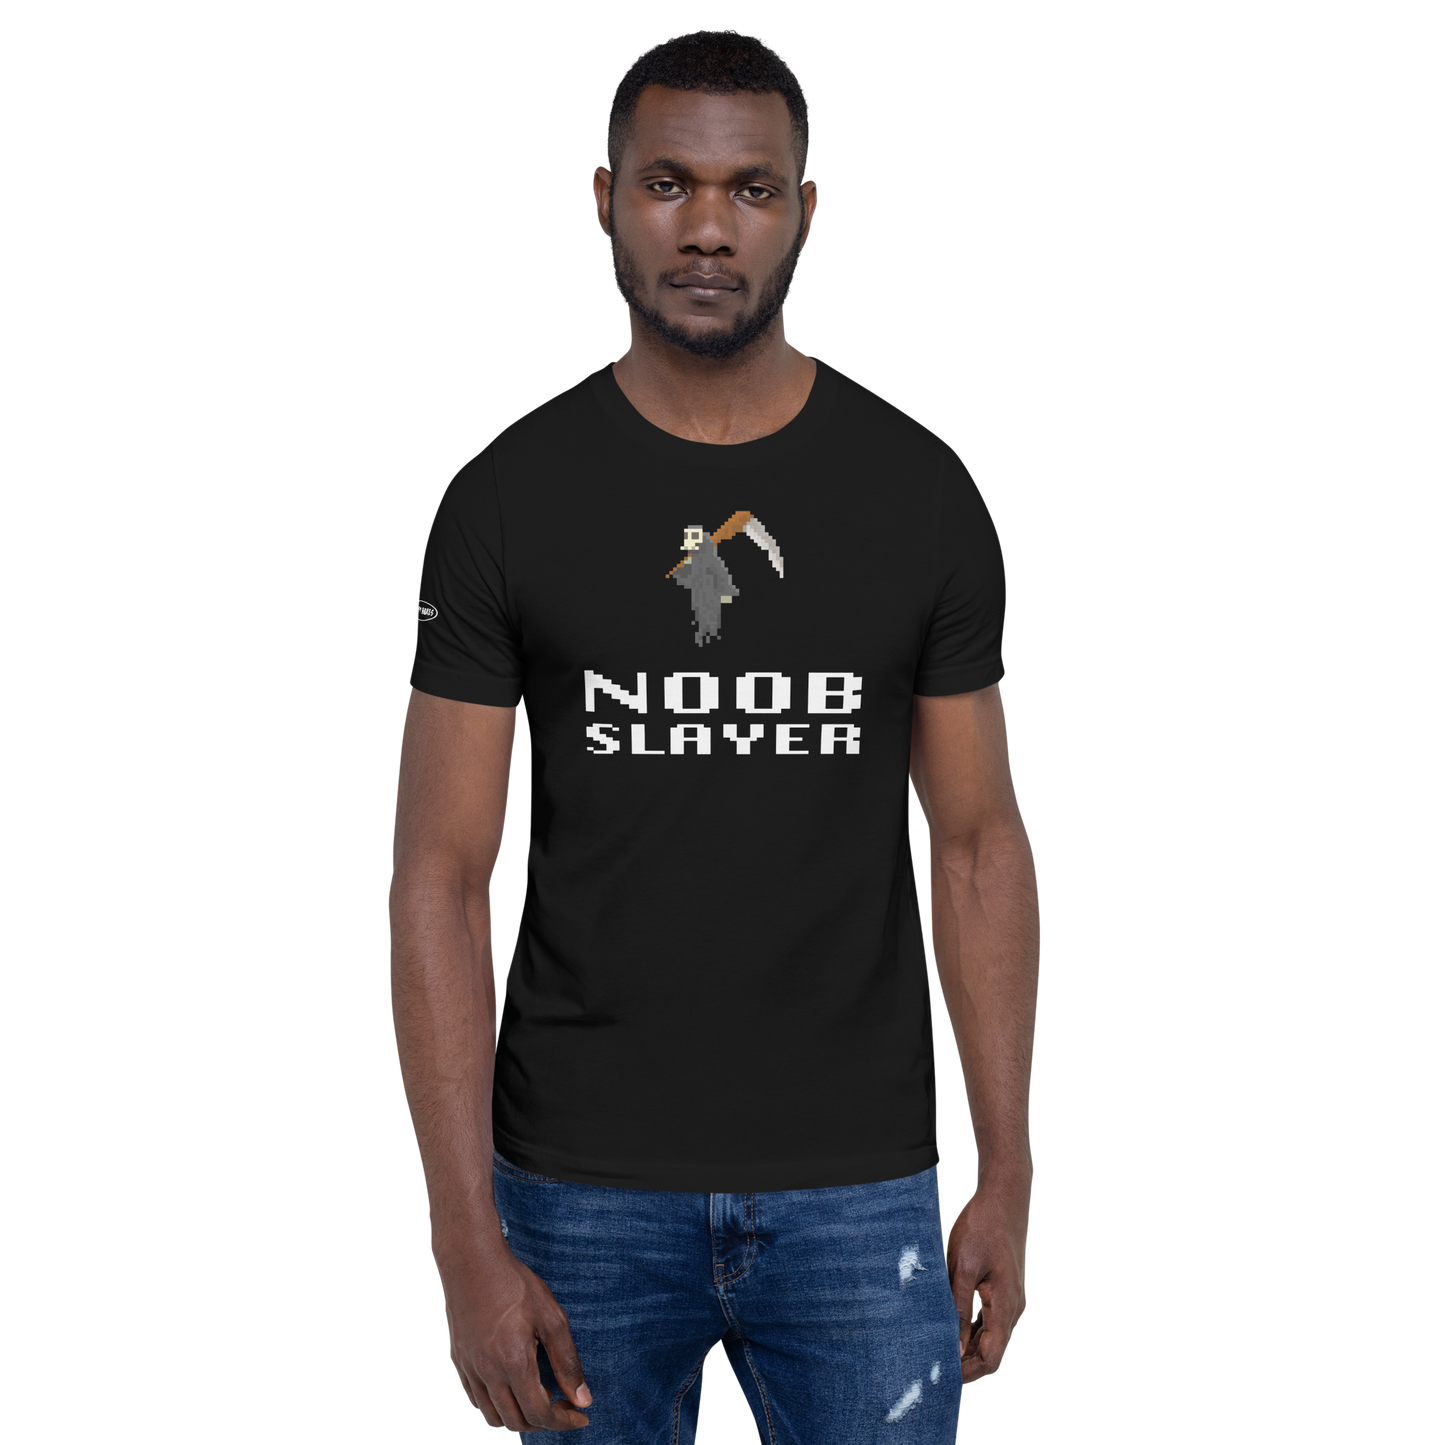 GAMER - Noob Slayer - Funny t-shirt